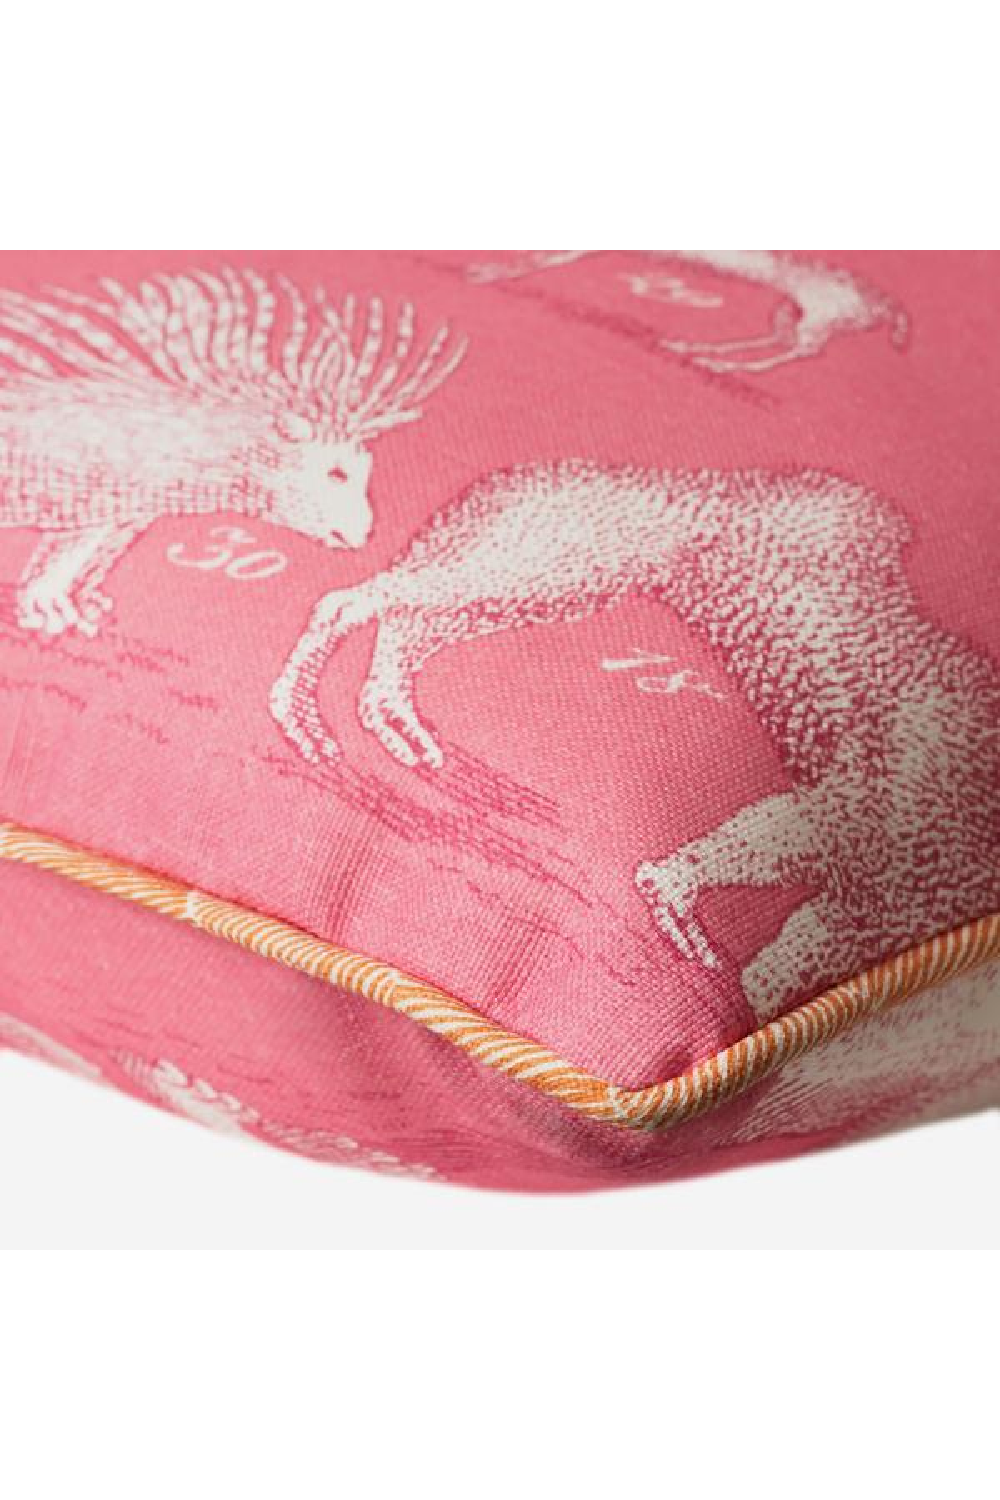 Animal Print Outdoor Throw Pillow | Andrew Martin Kingdom | Oroa.com